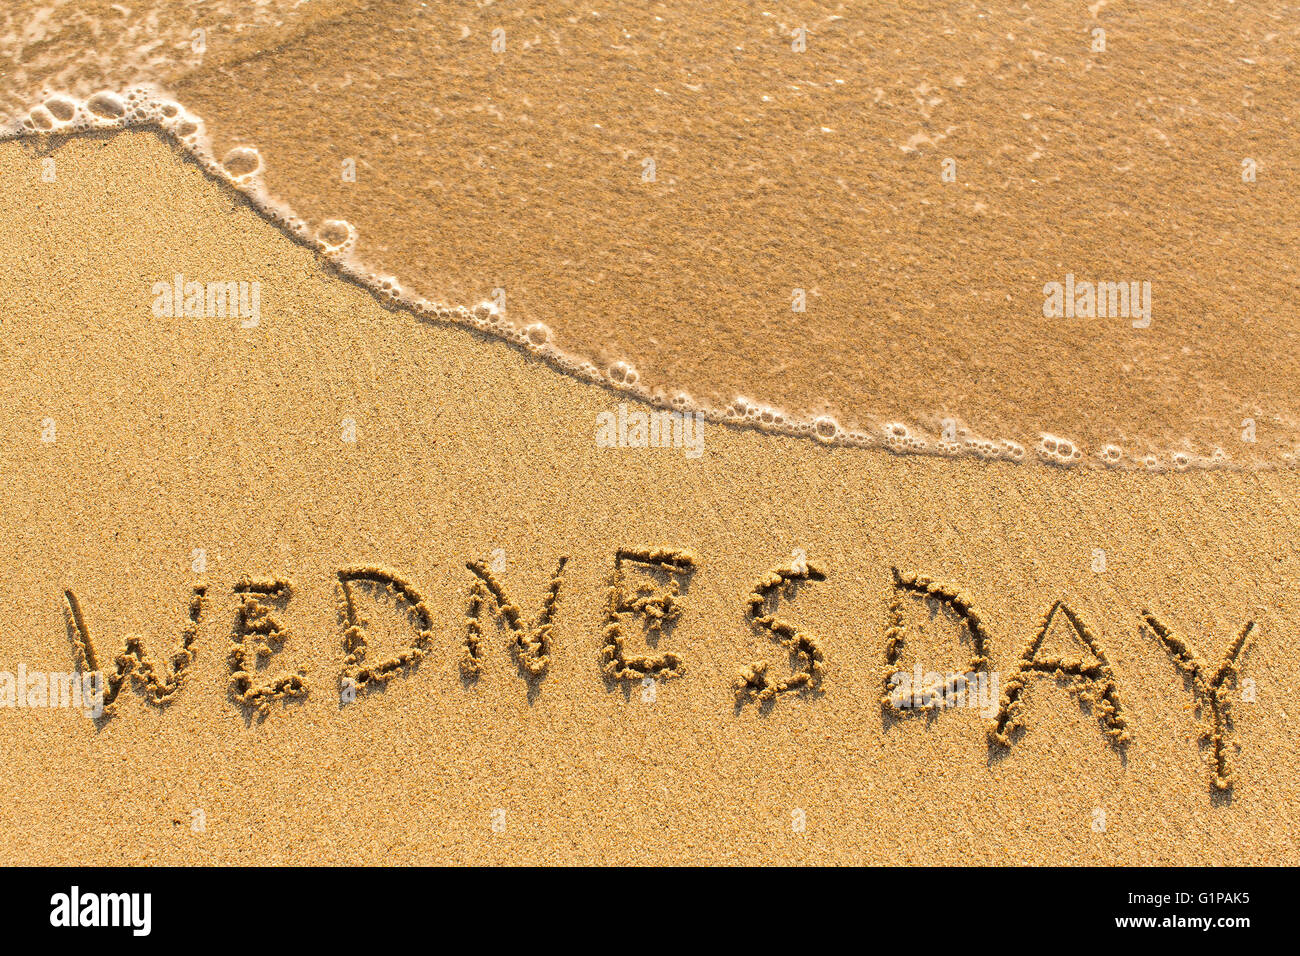 Mercoledì - scritta a mano su una luce dorata spiaggia di sabbia. Foto Stock